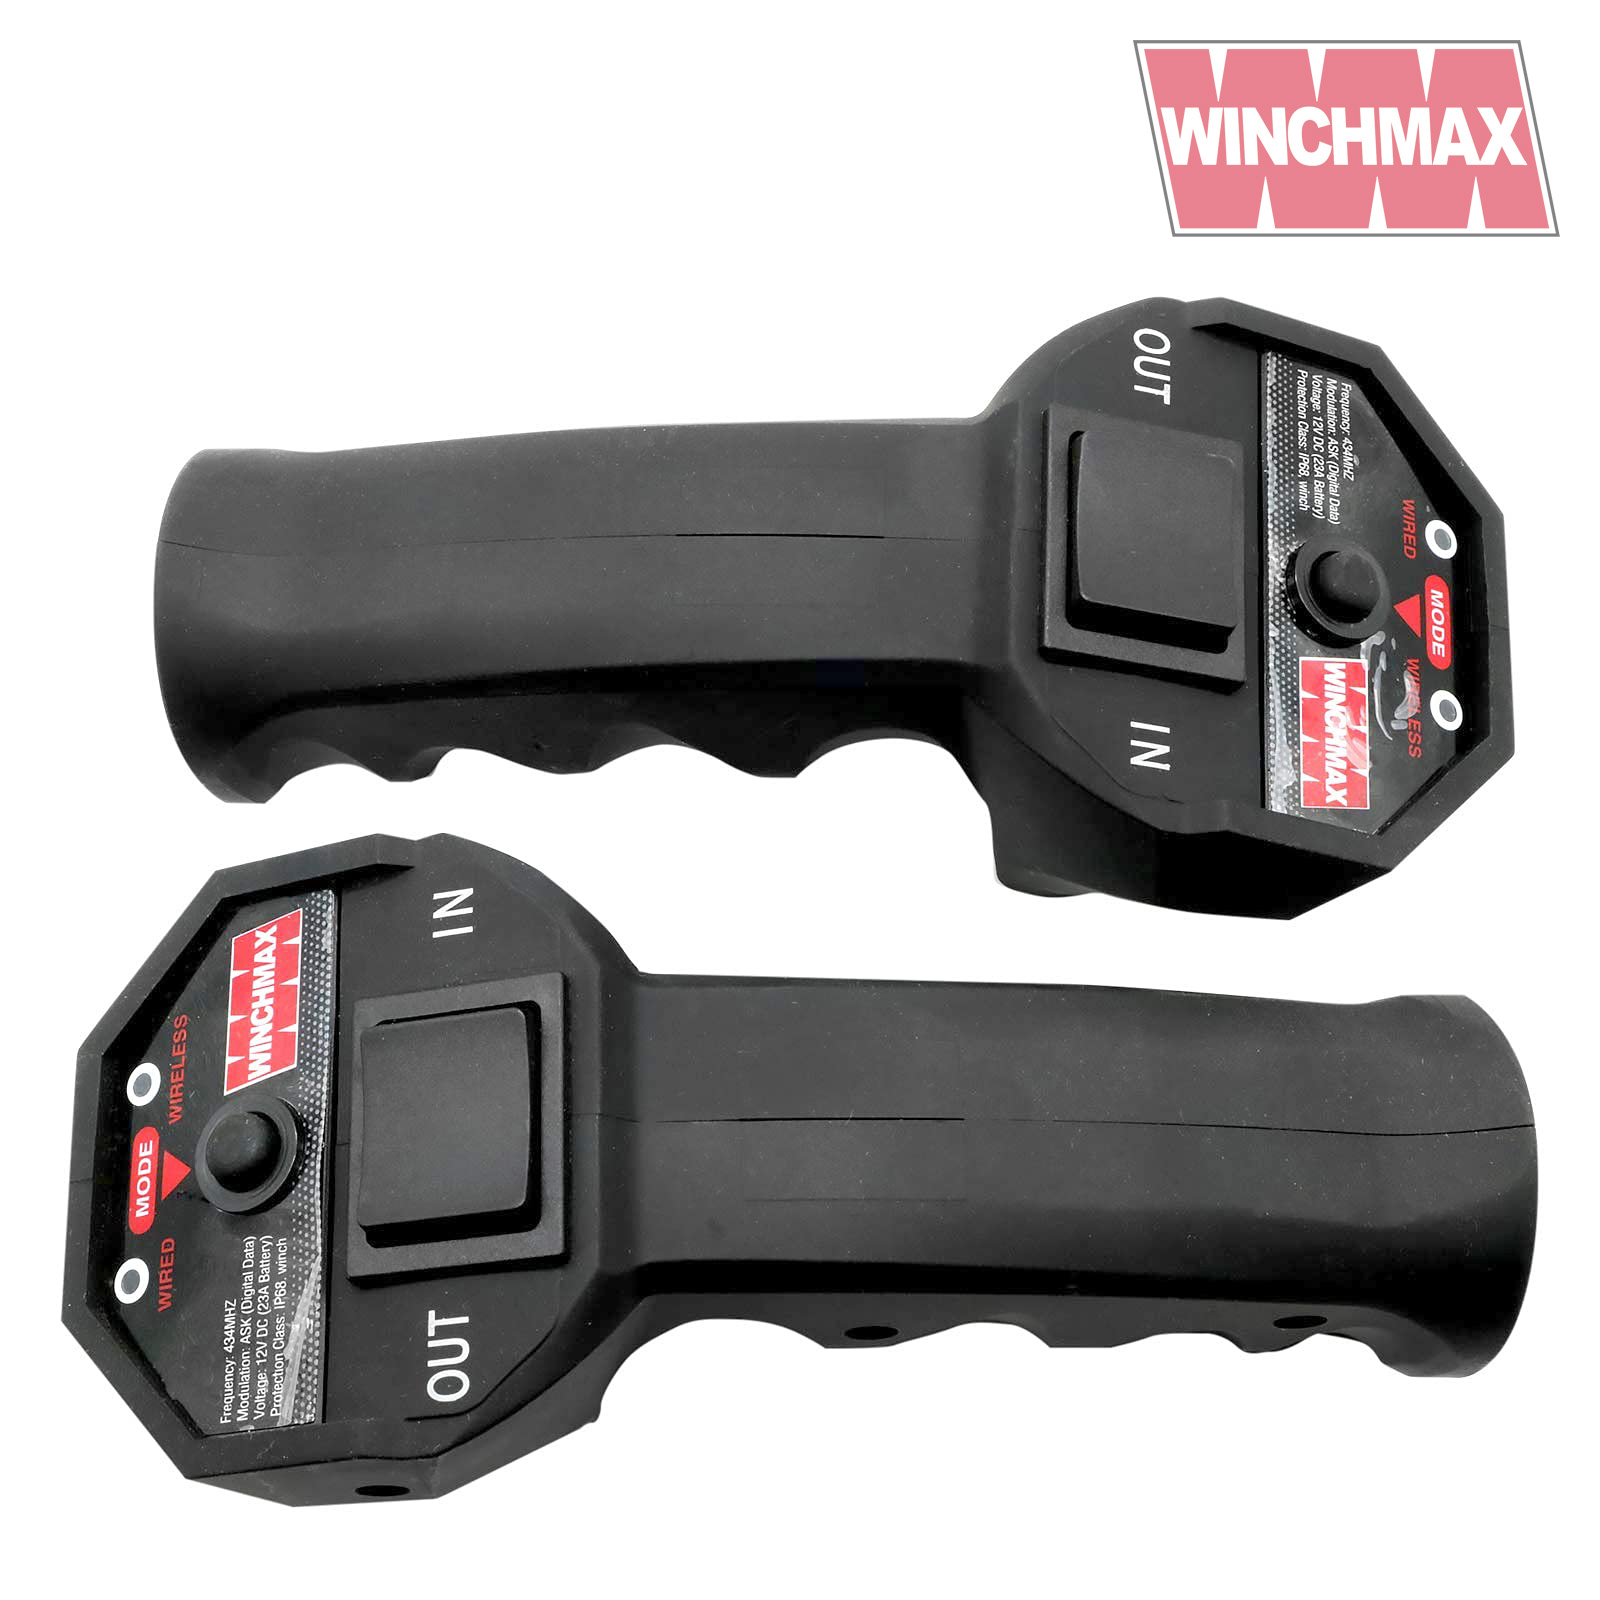 Winchmax wireless remotes